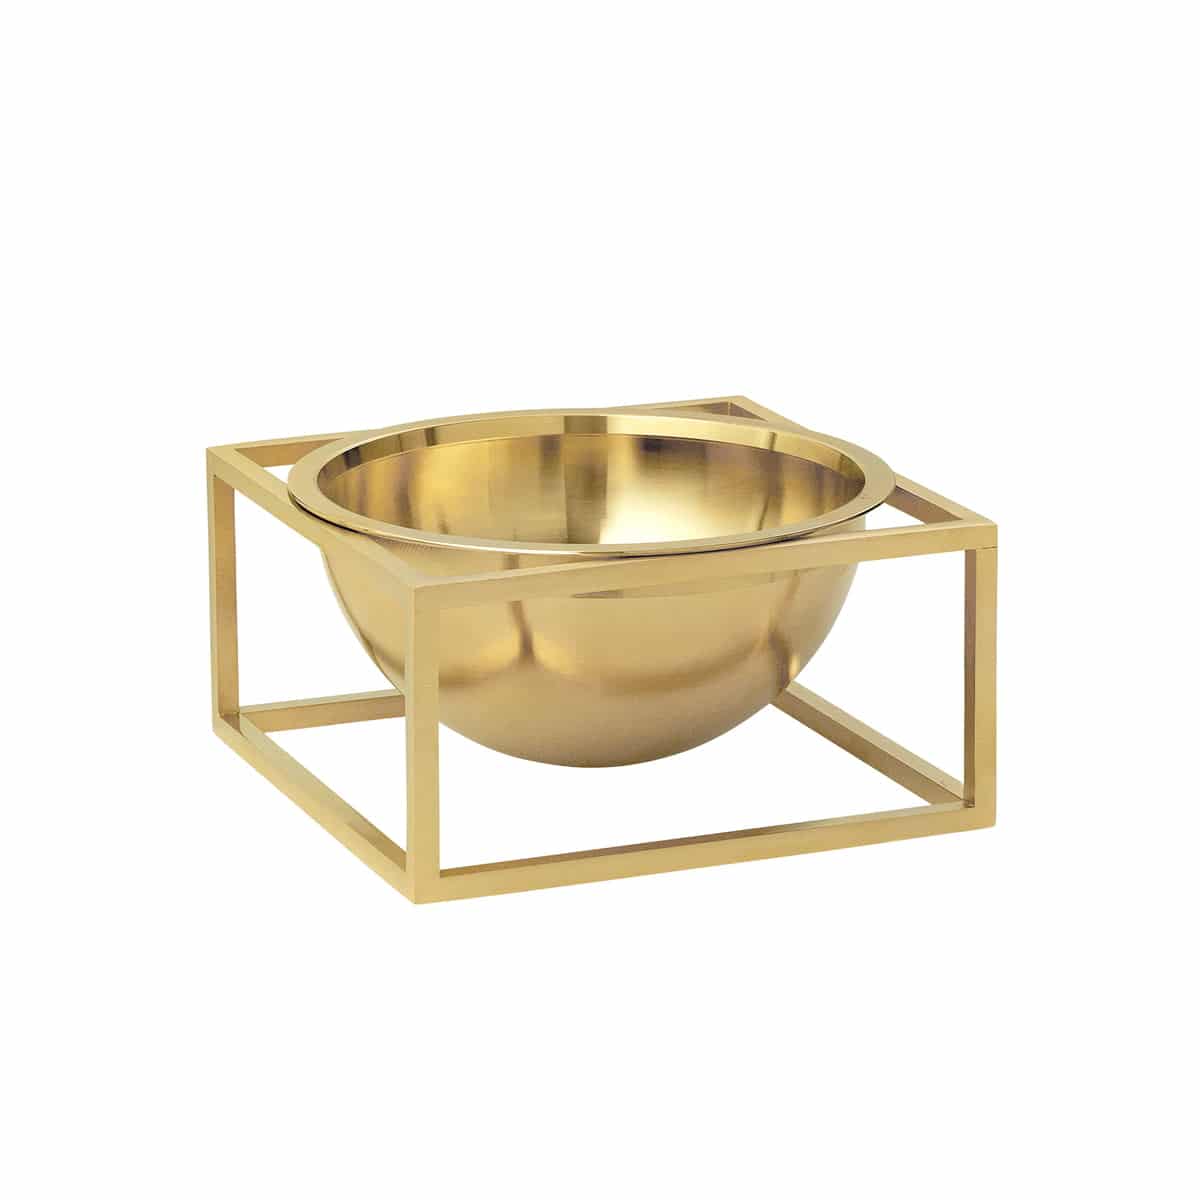 By Lassen Kubus Bowl Centerpiece brass gold Messing